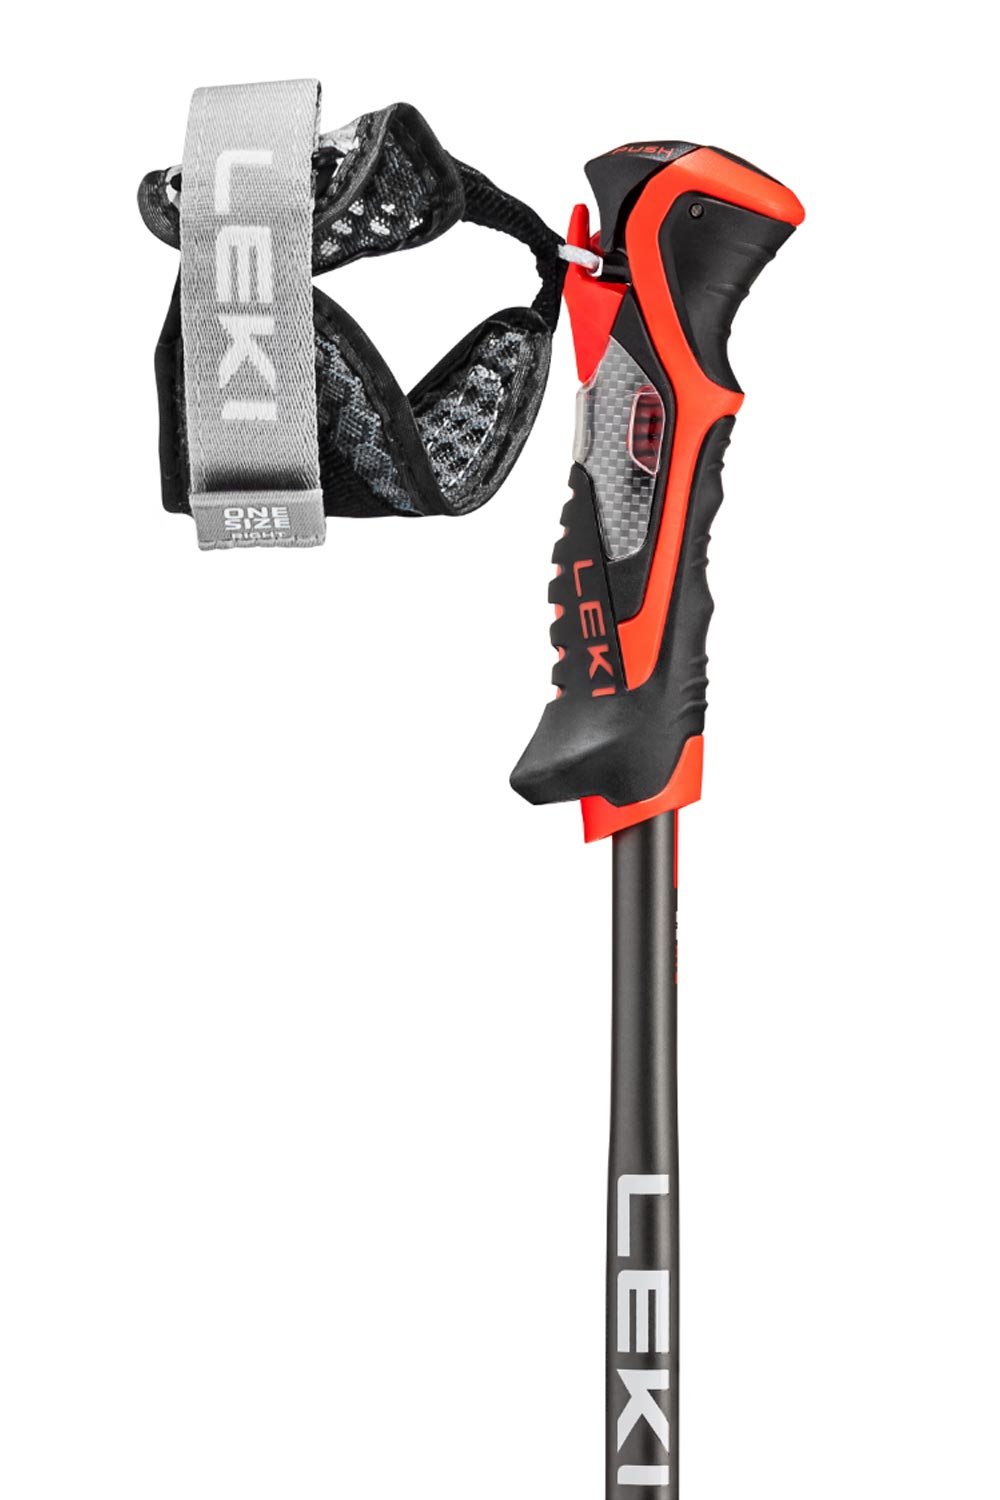 Leki ski pole, black with red accents